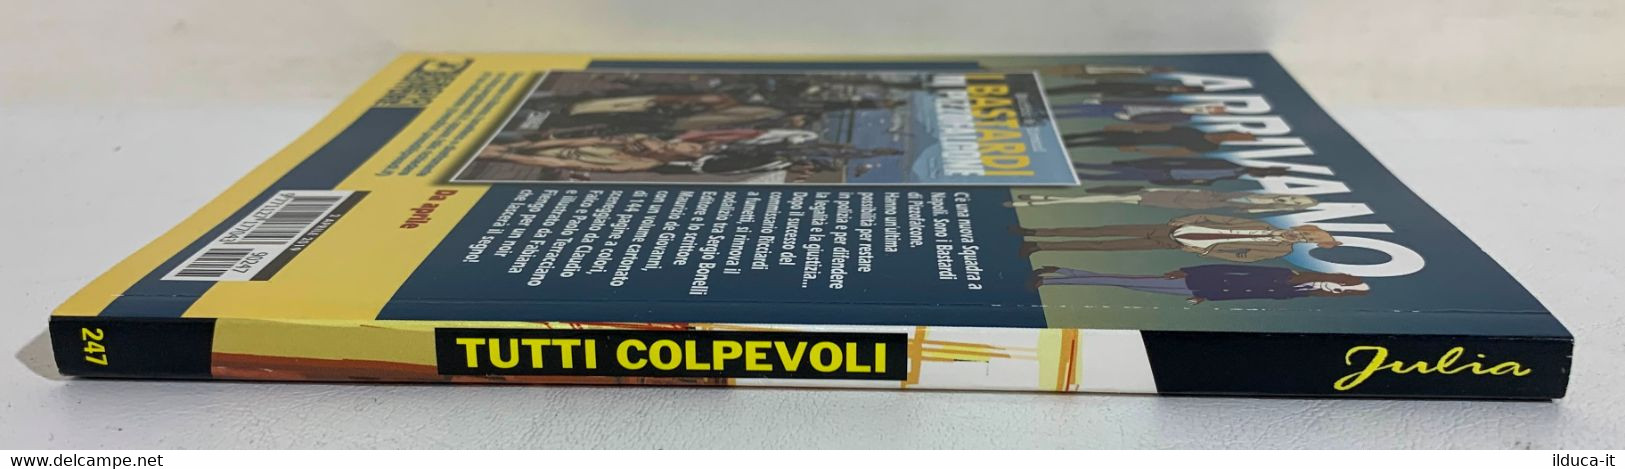 I107487 JULIA N. 247 - Tutti Colpevoli - Bonelli 2019 - Bonelli